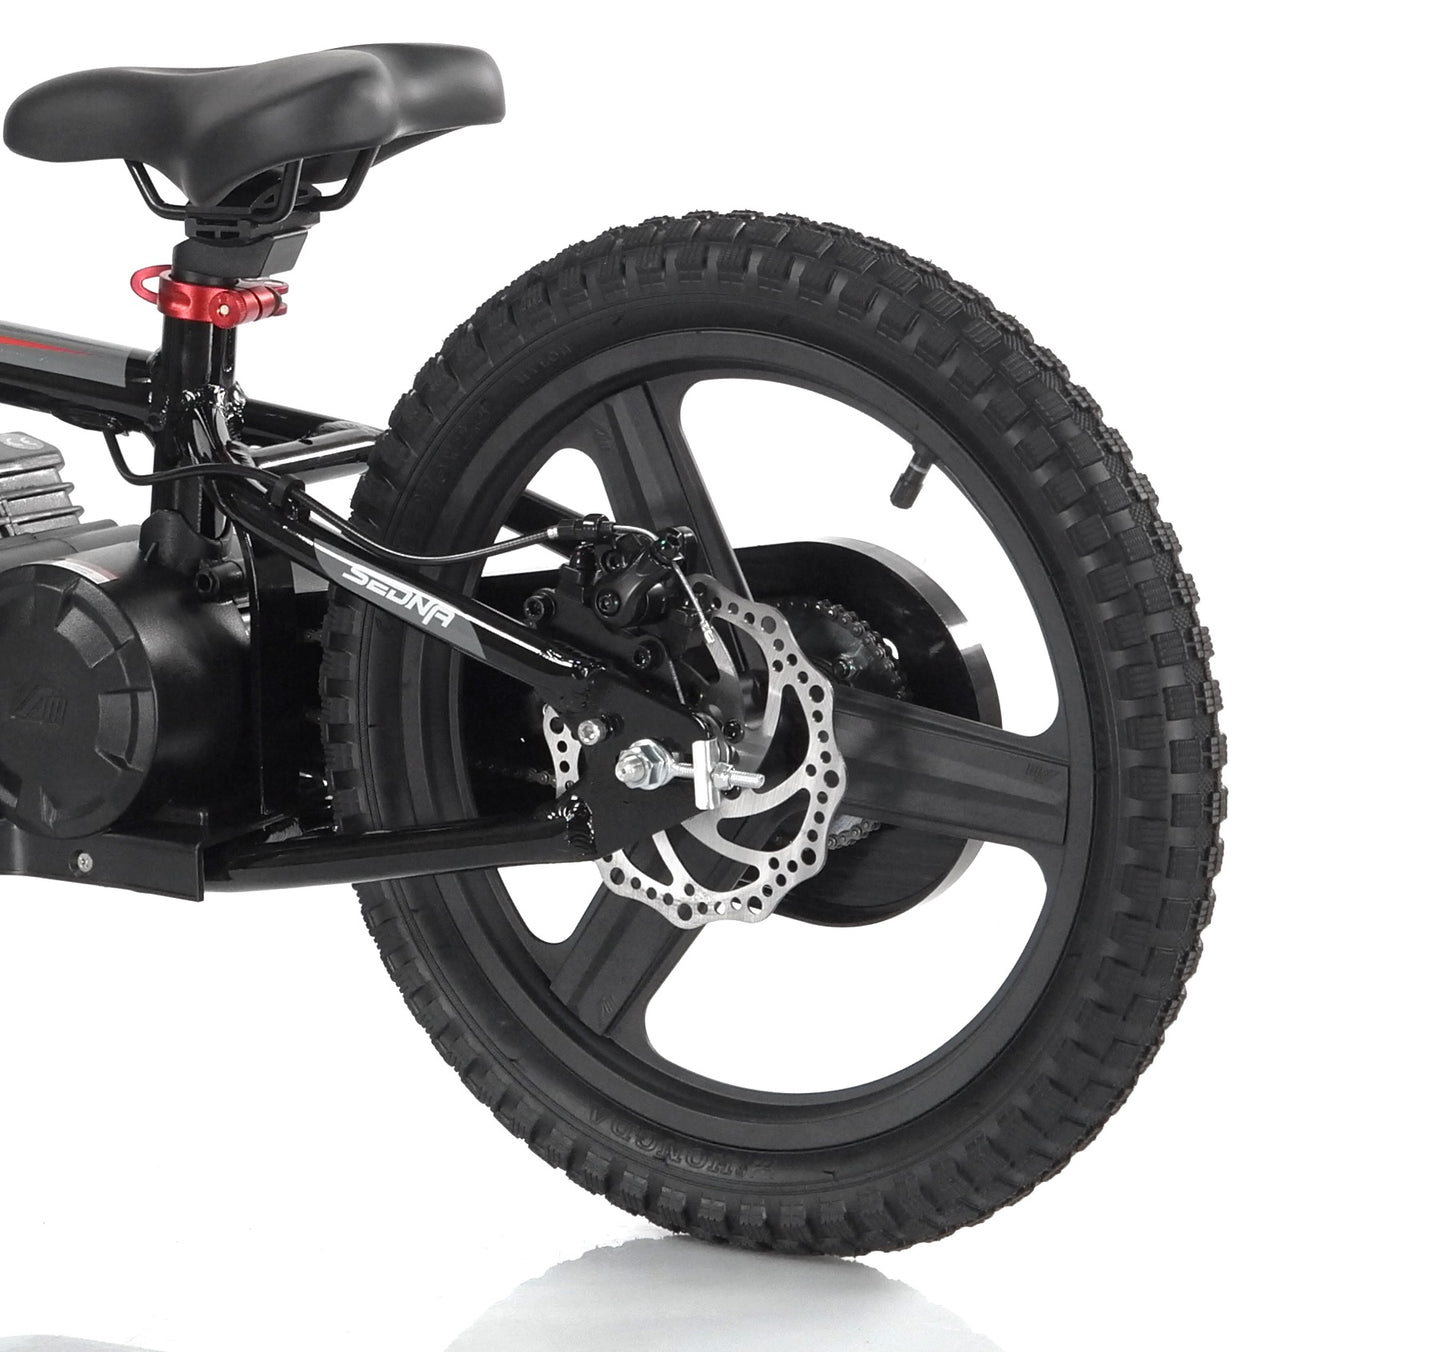 Revvi 16" Plus Electric Balance Bike - Black - motocross4u